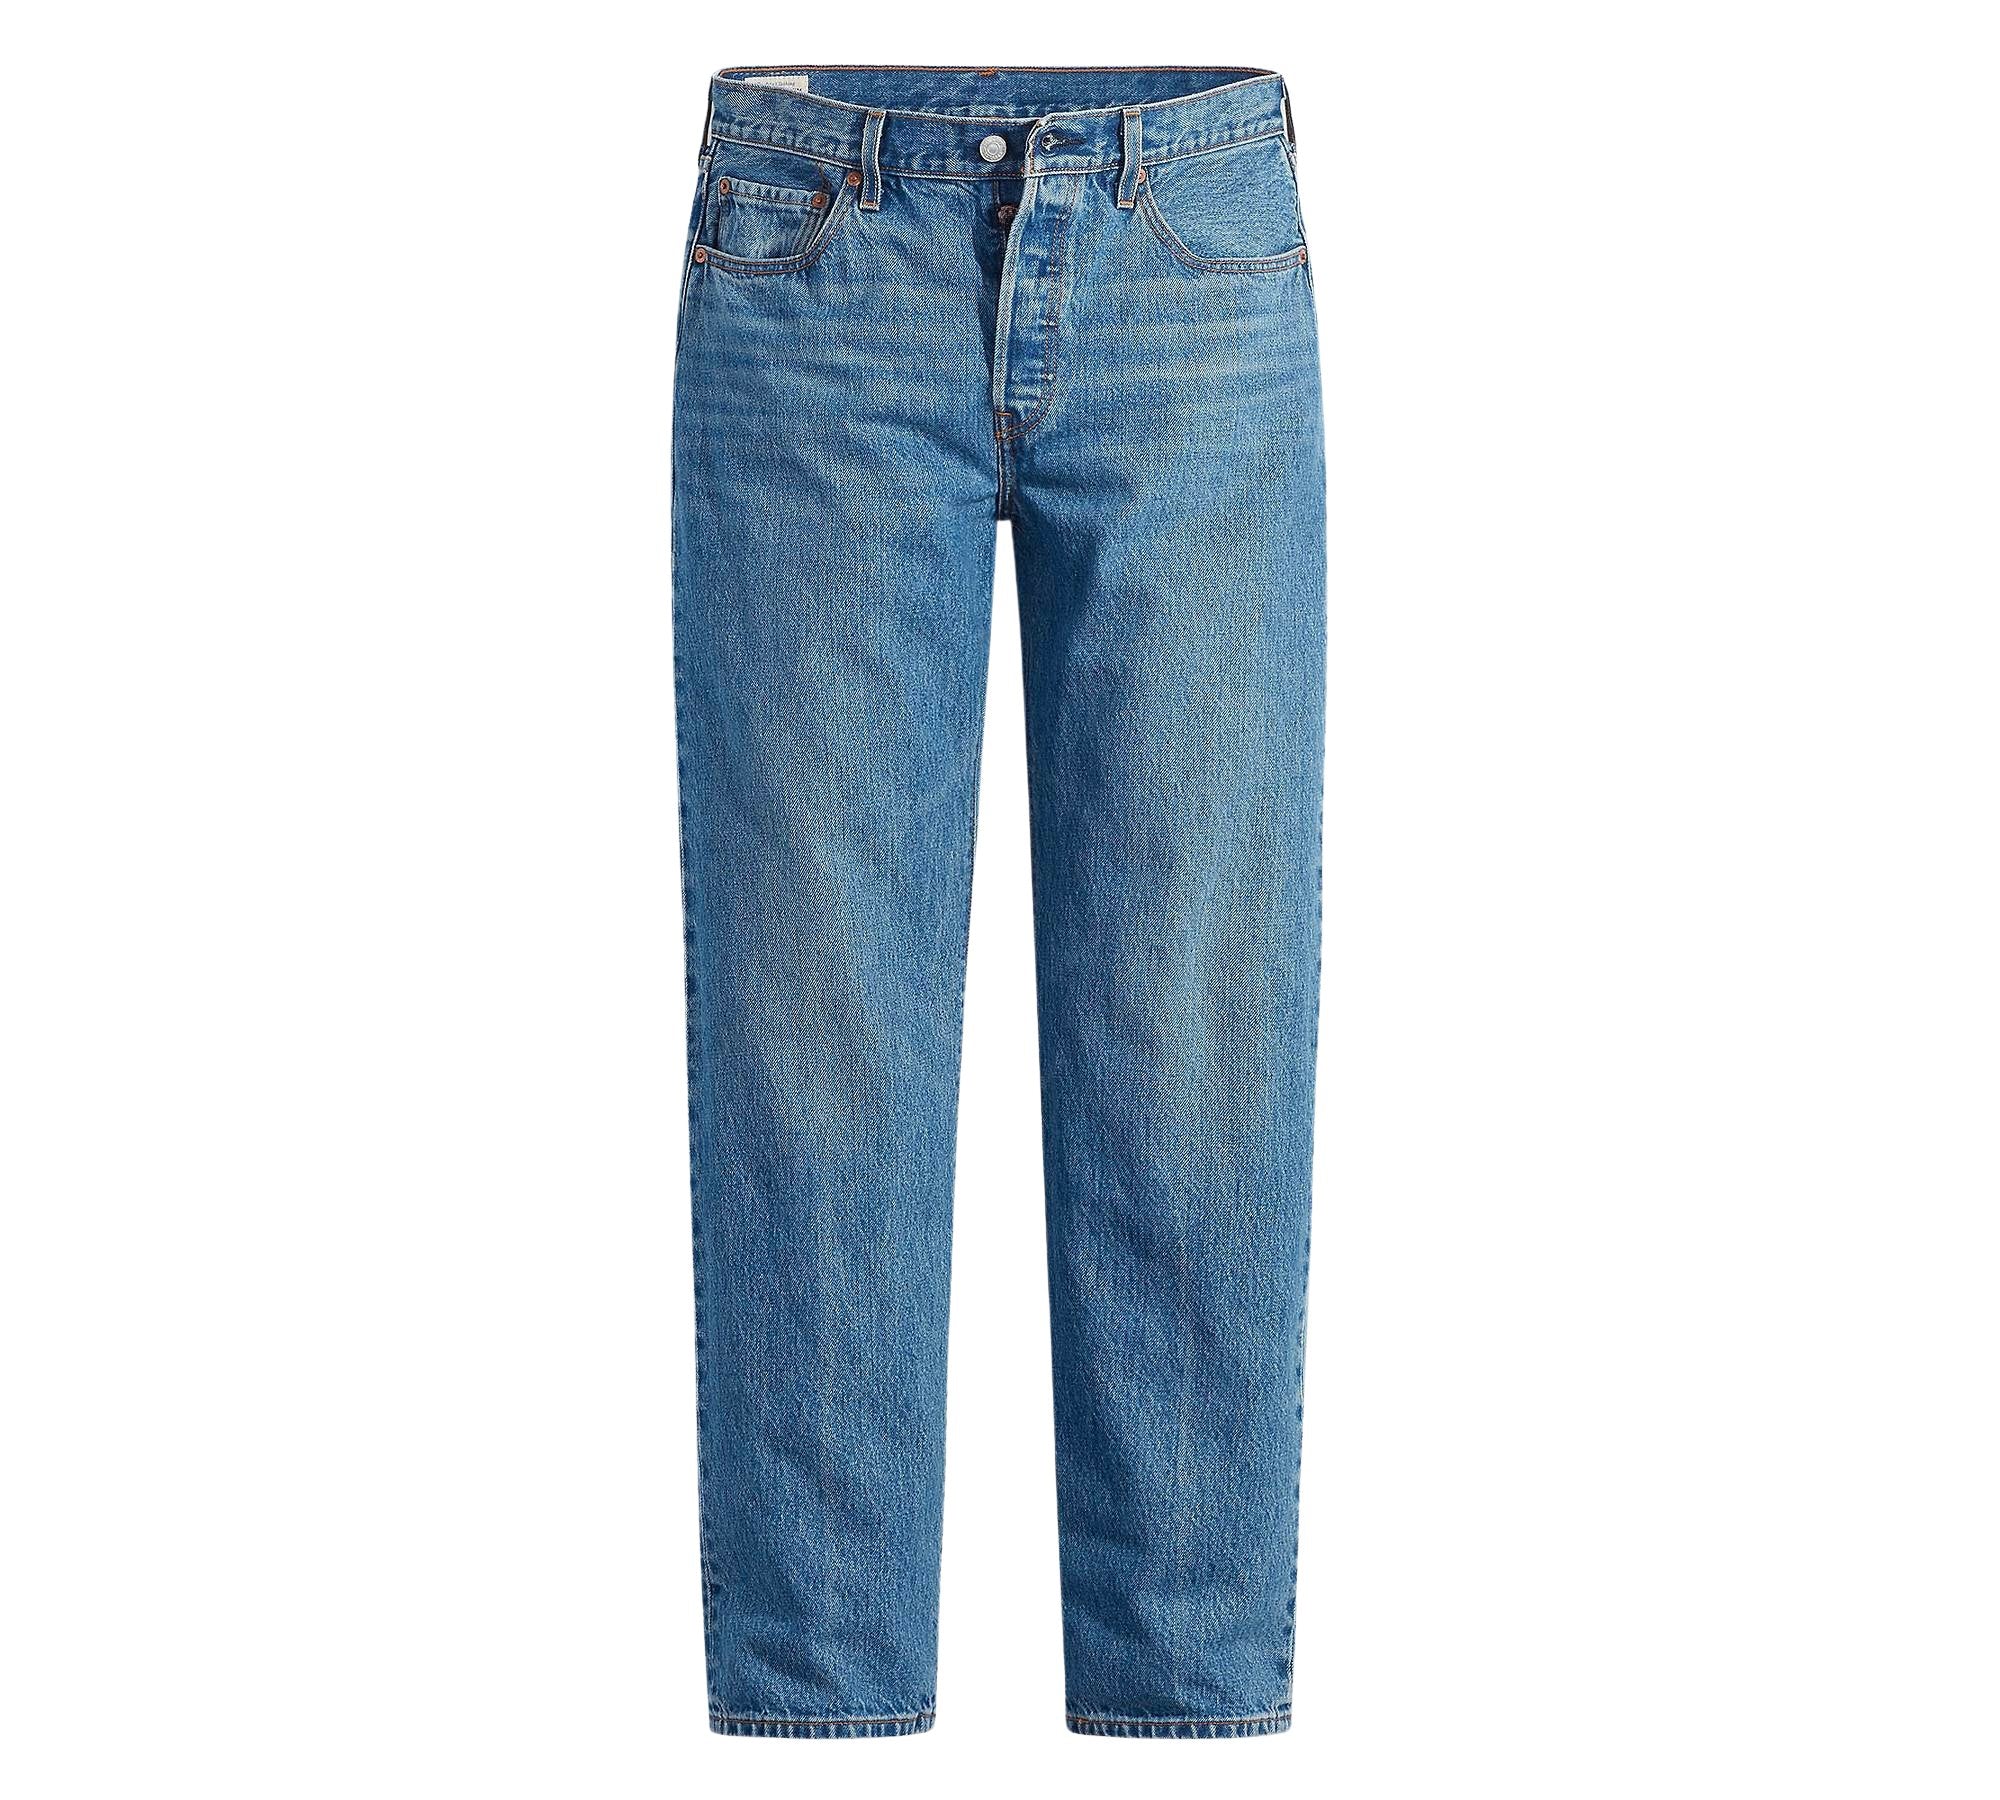 4 Pack - Vintage LEVI'S Classic Blue Zip Fly Jeans - Waist 36 - Length 30 - Vintage Superstore Online